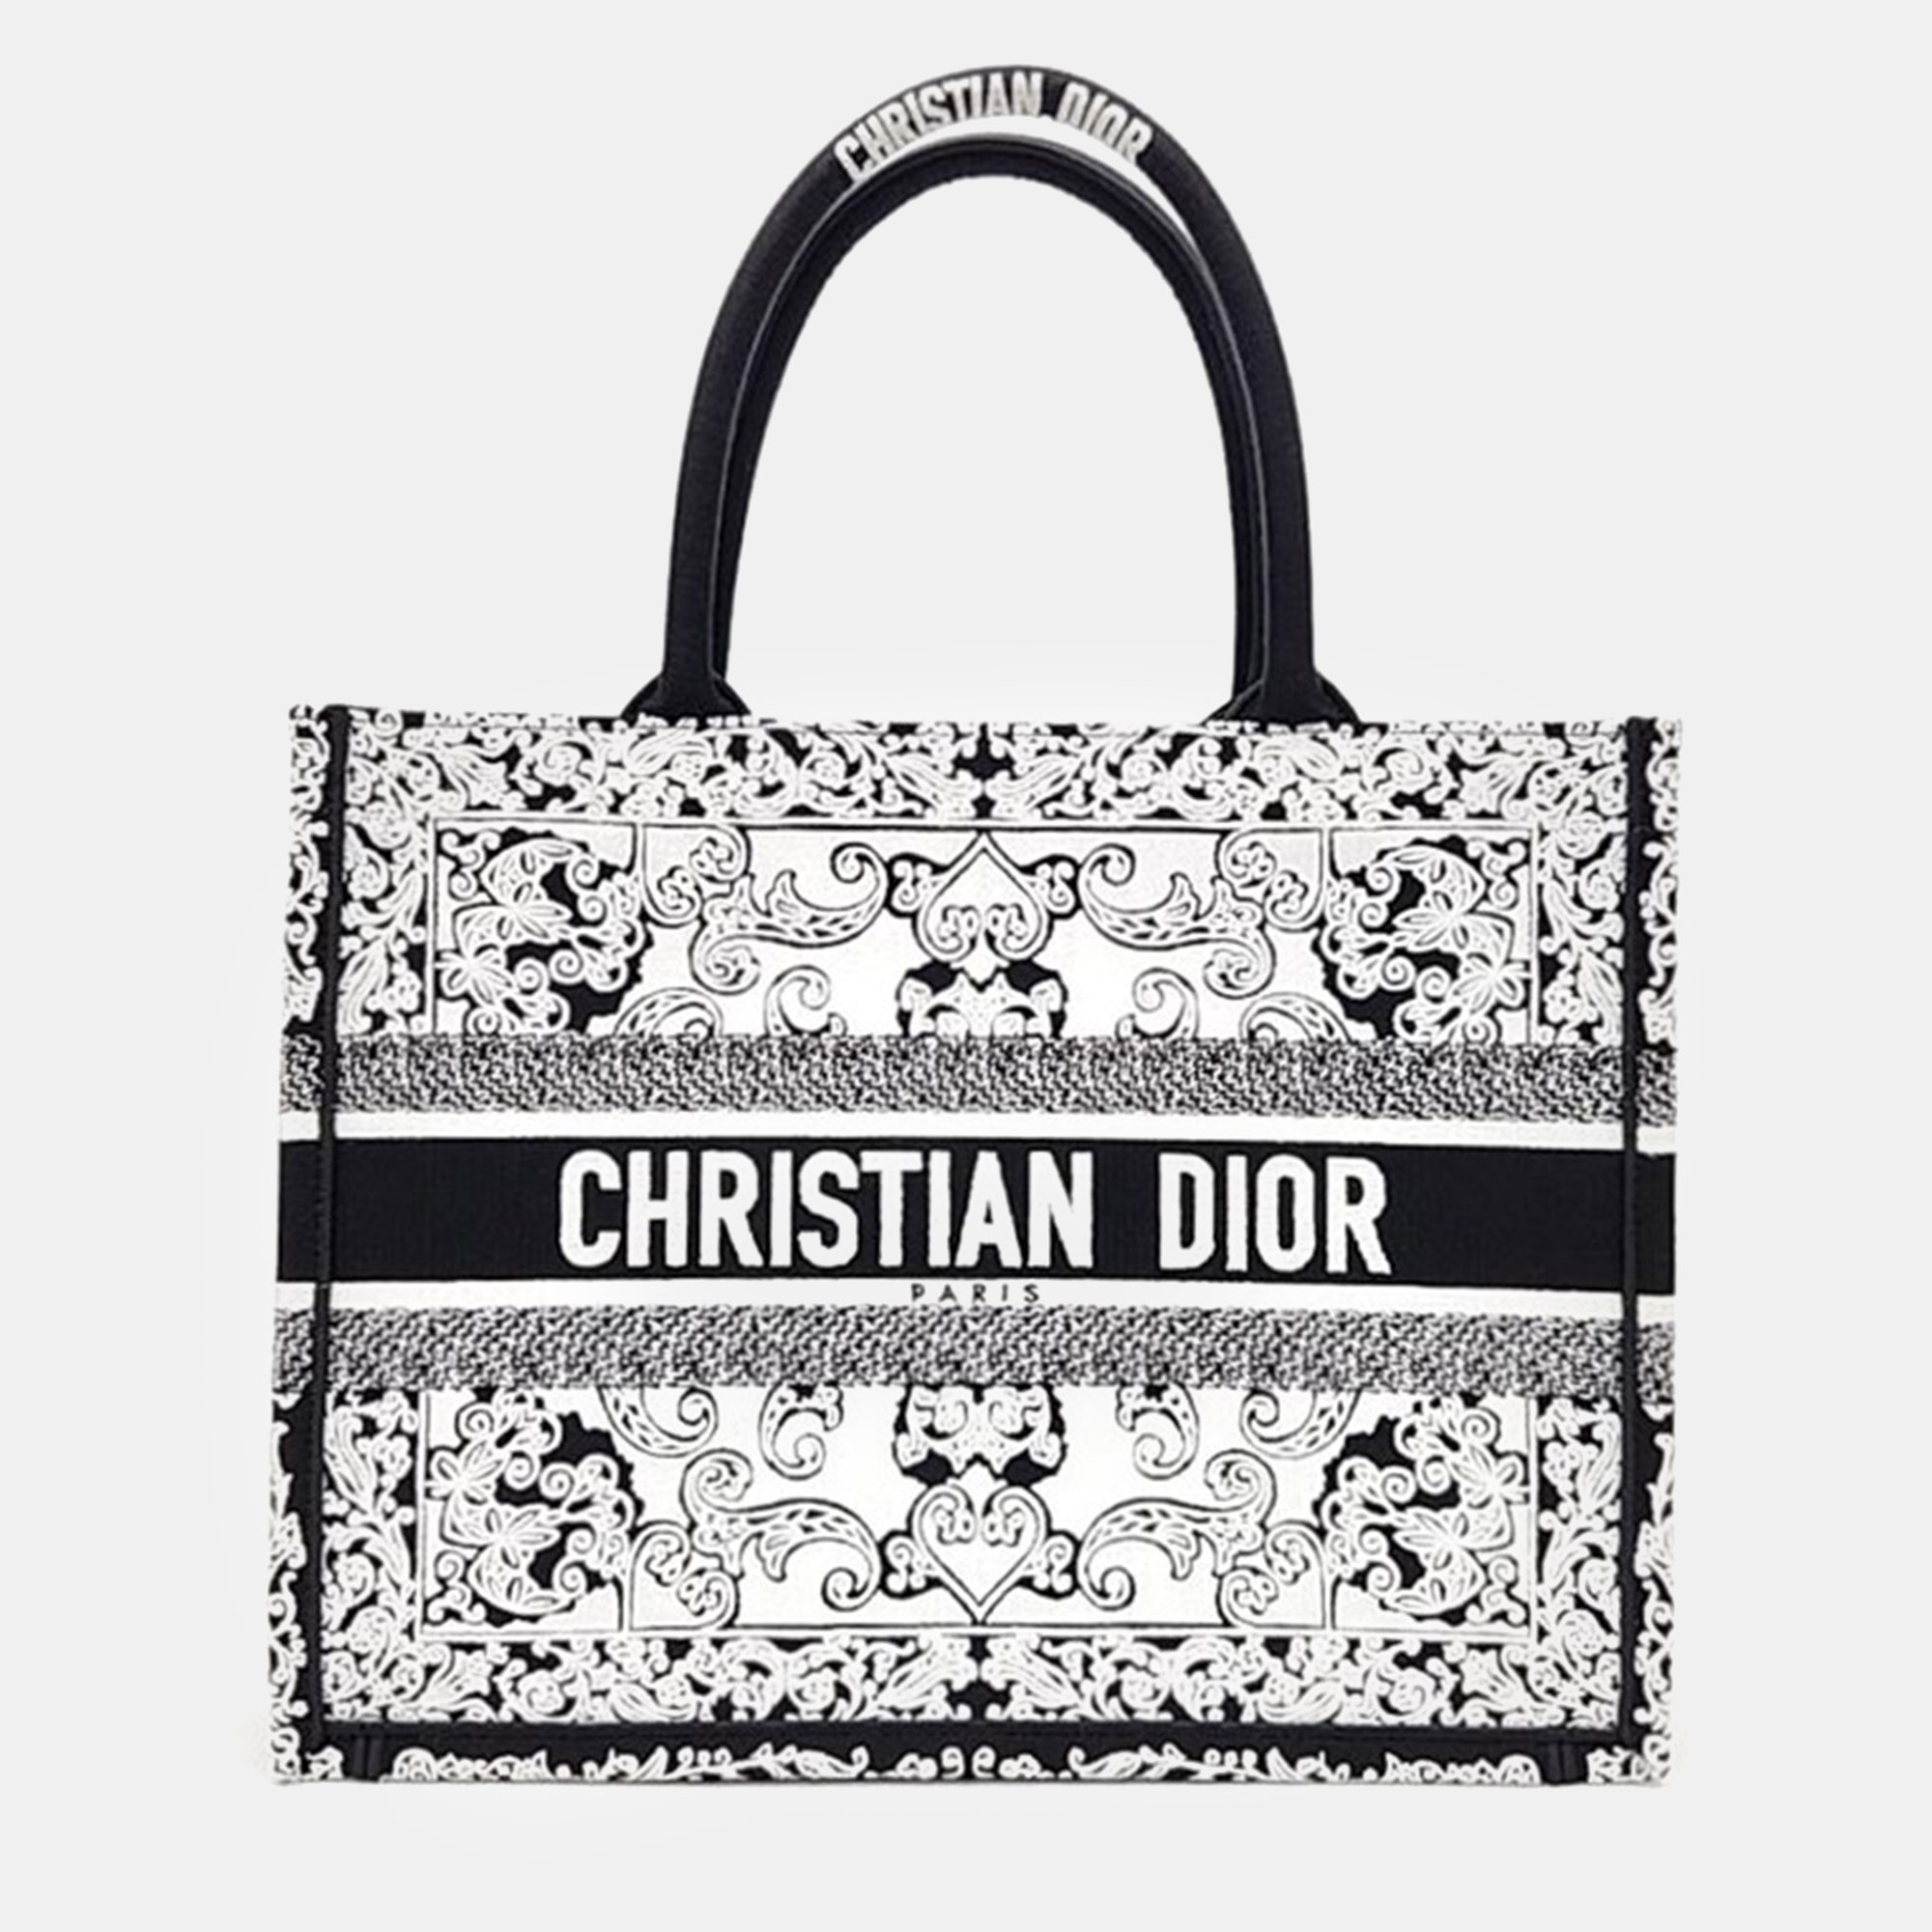 Christian dior's book tote bag 36